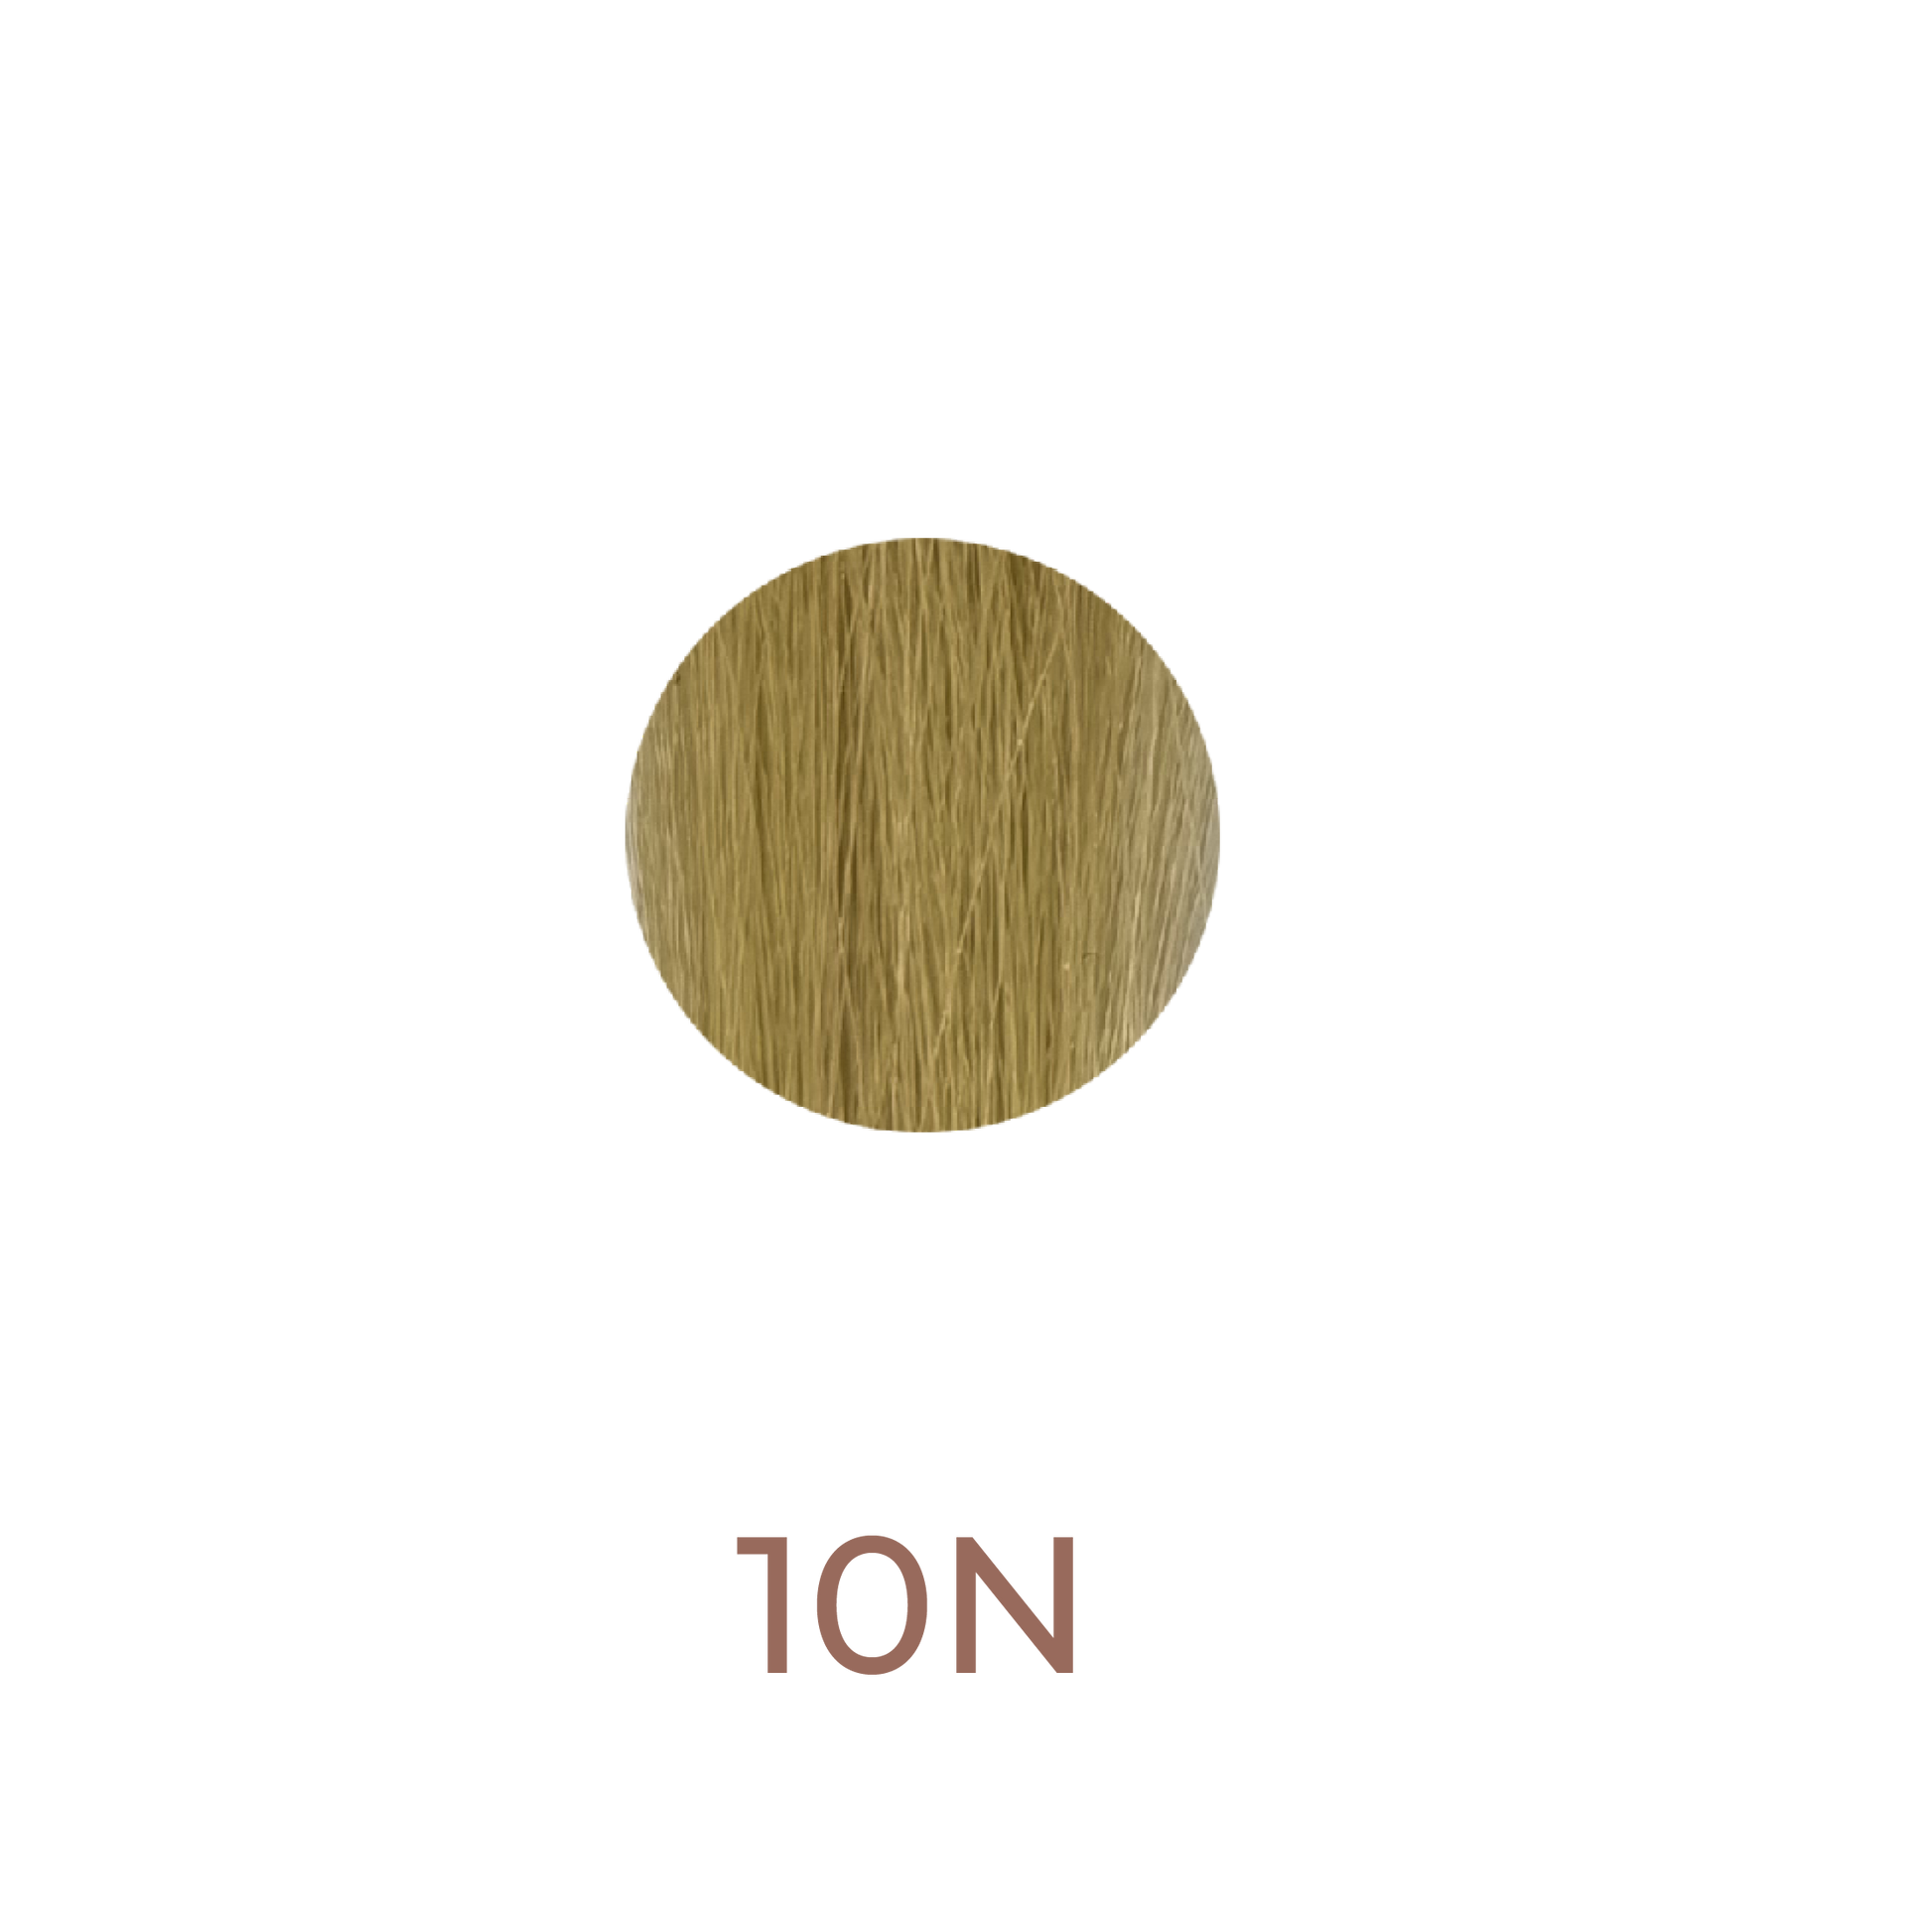 CHI IONIC Shine Shades Liquid Hair Color - 71 tone 10N Extra Light Blonde | Lika-J